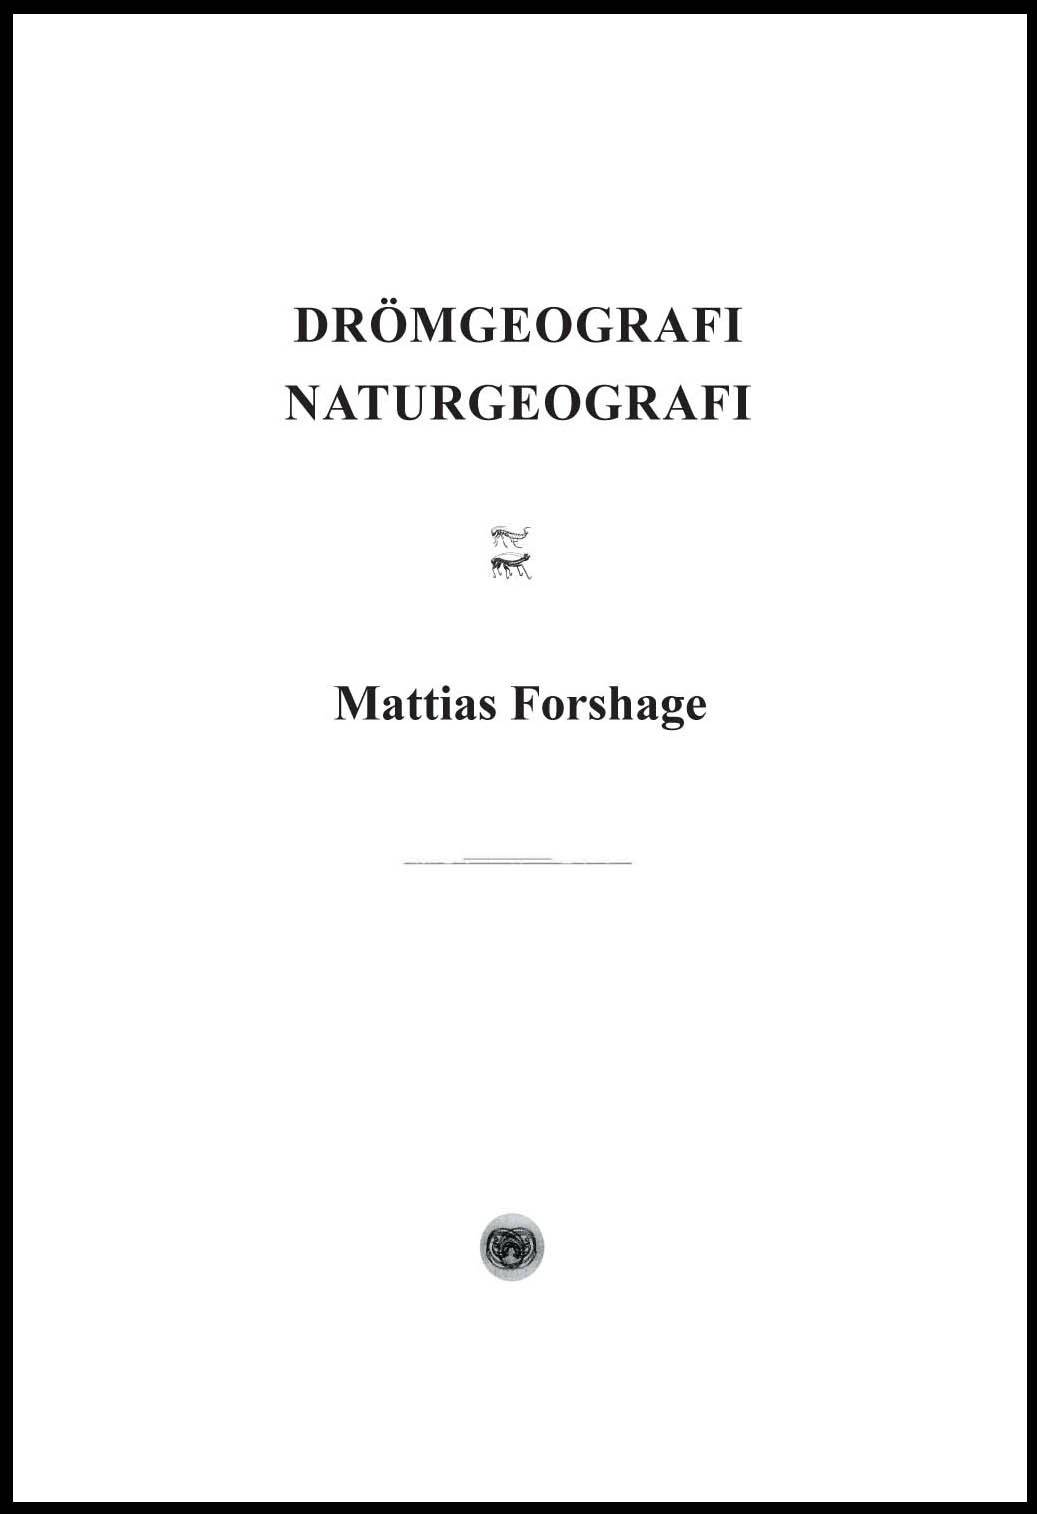 Drömgeografi Naturgeografi